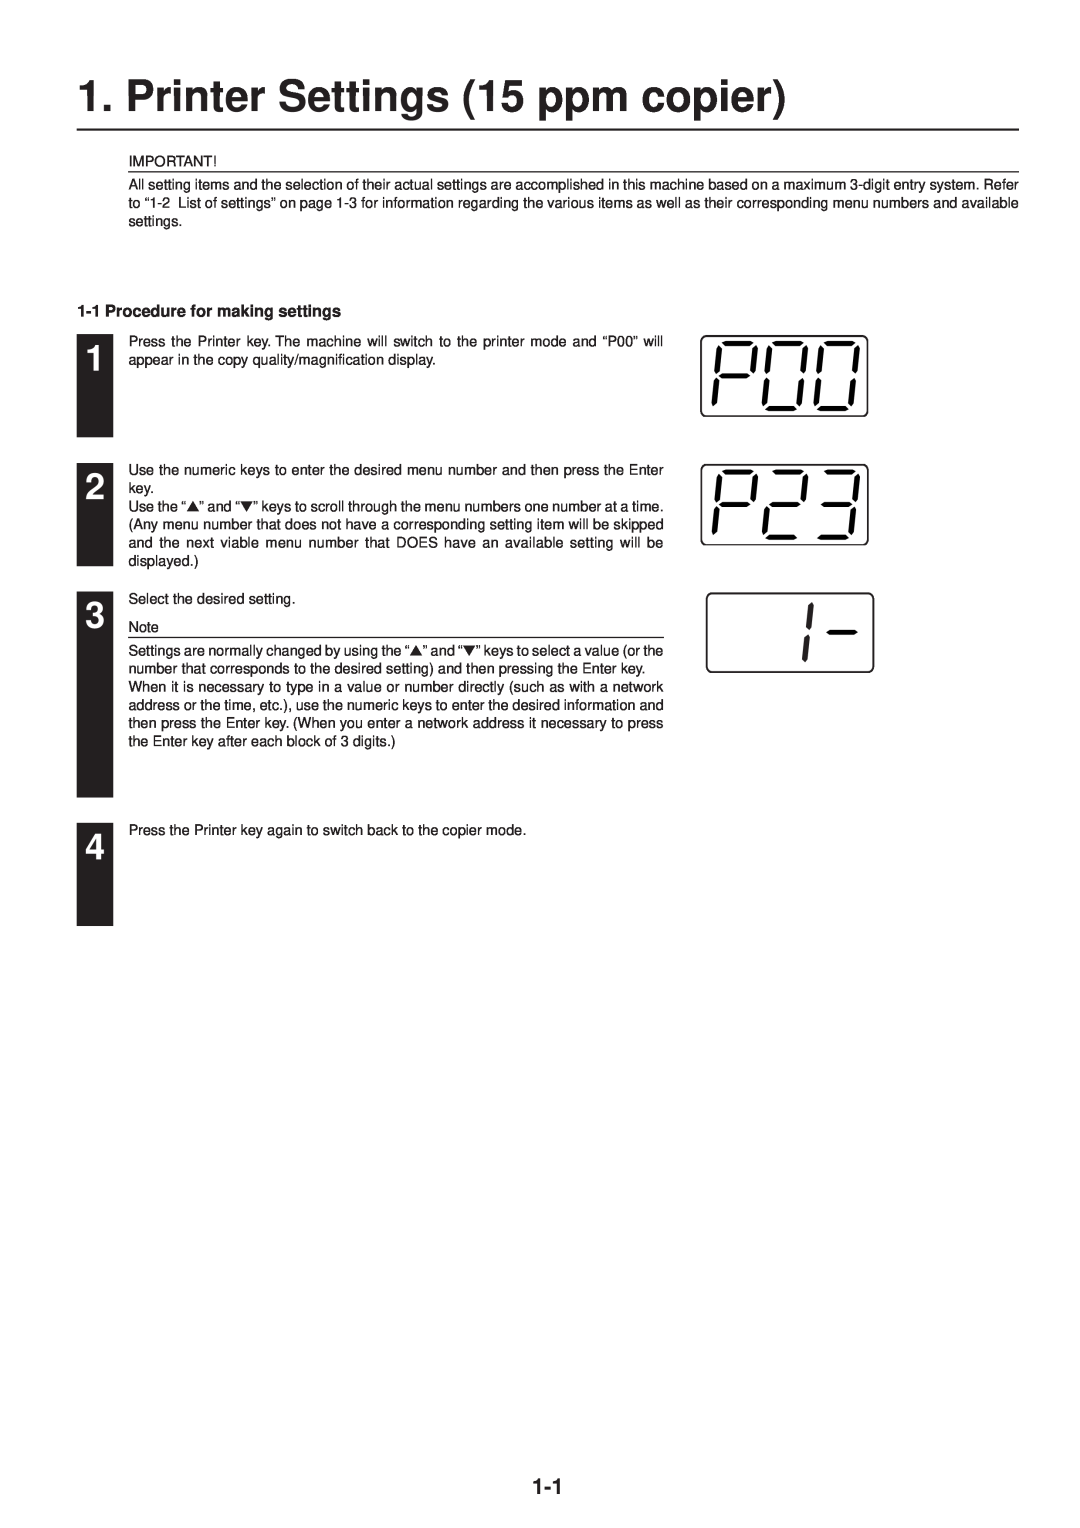 IBM Printing System manual Printer Settings 15 ppm copier, Procedure for making settings 